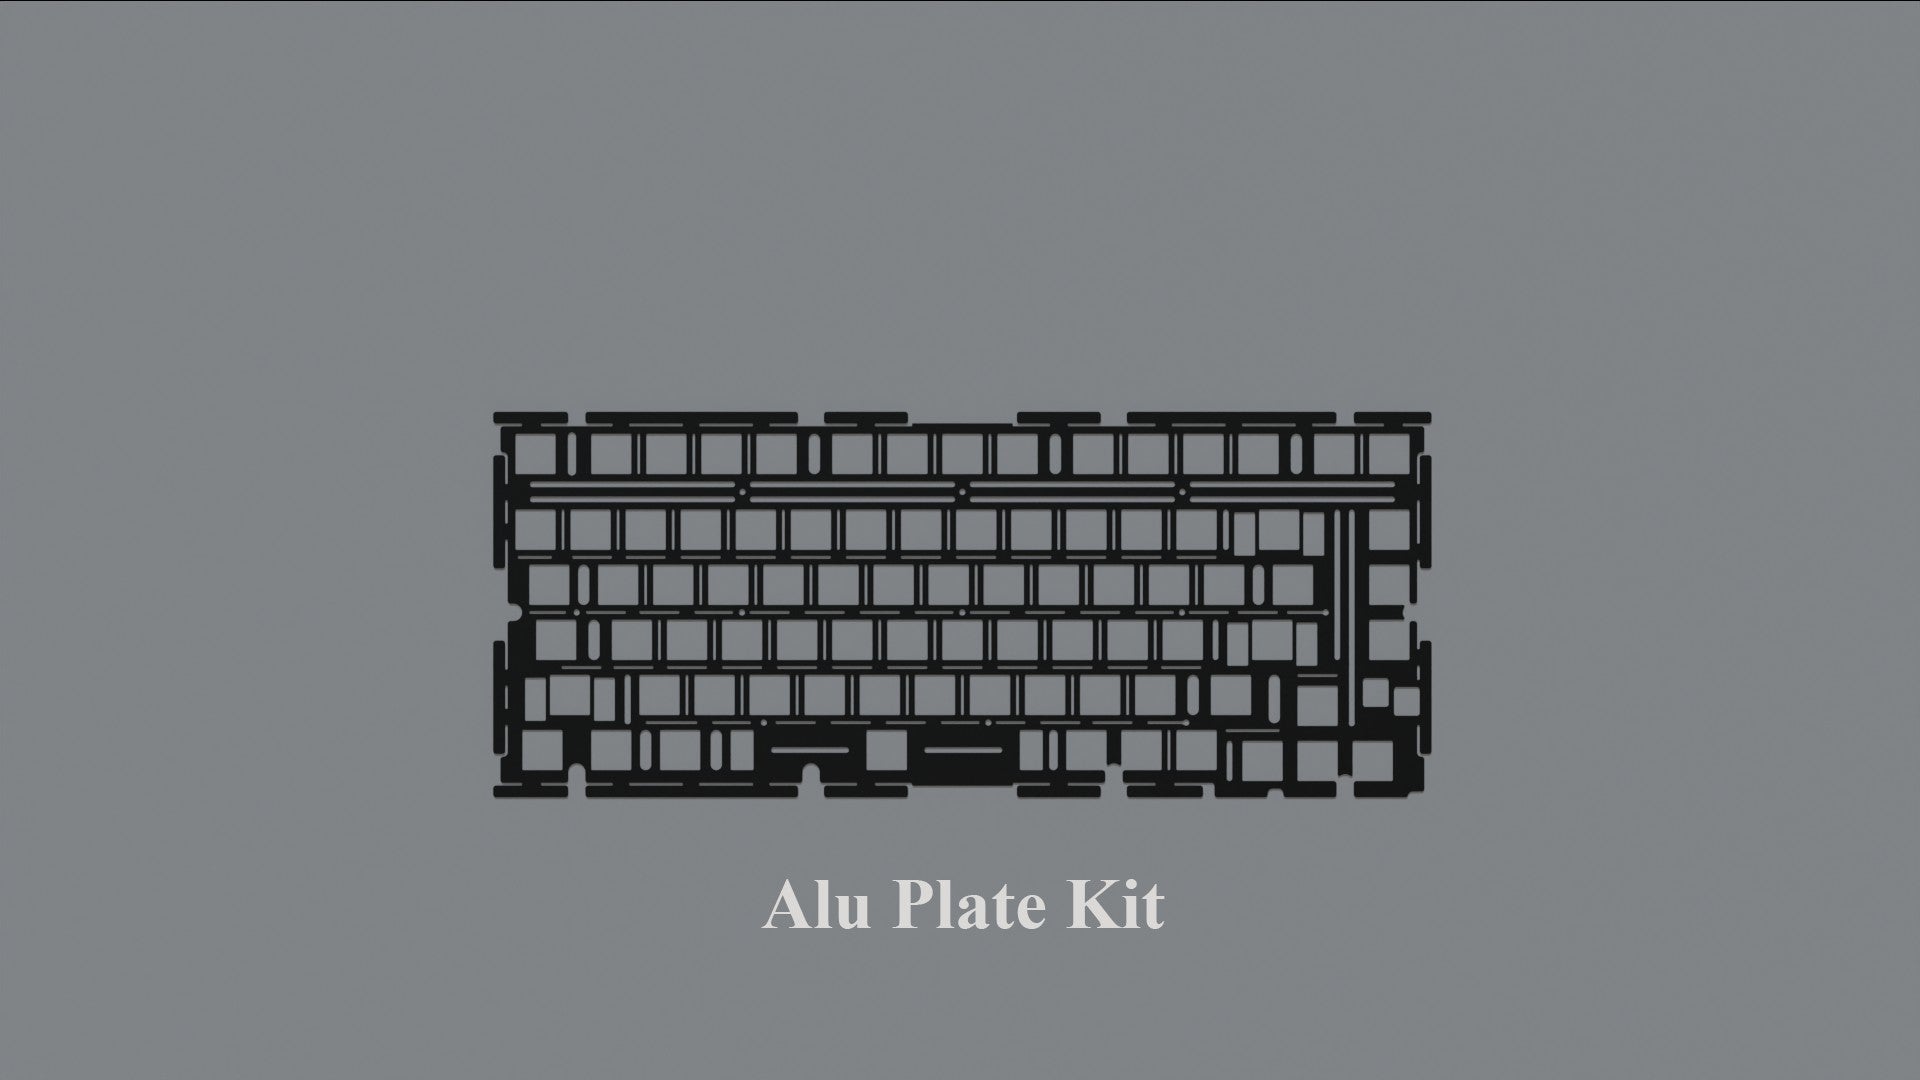 Hope 75X Mechanical Keyboard - Addons & Accessories